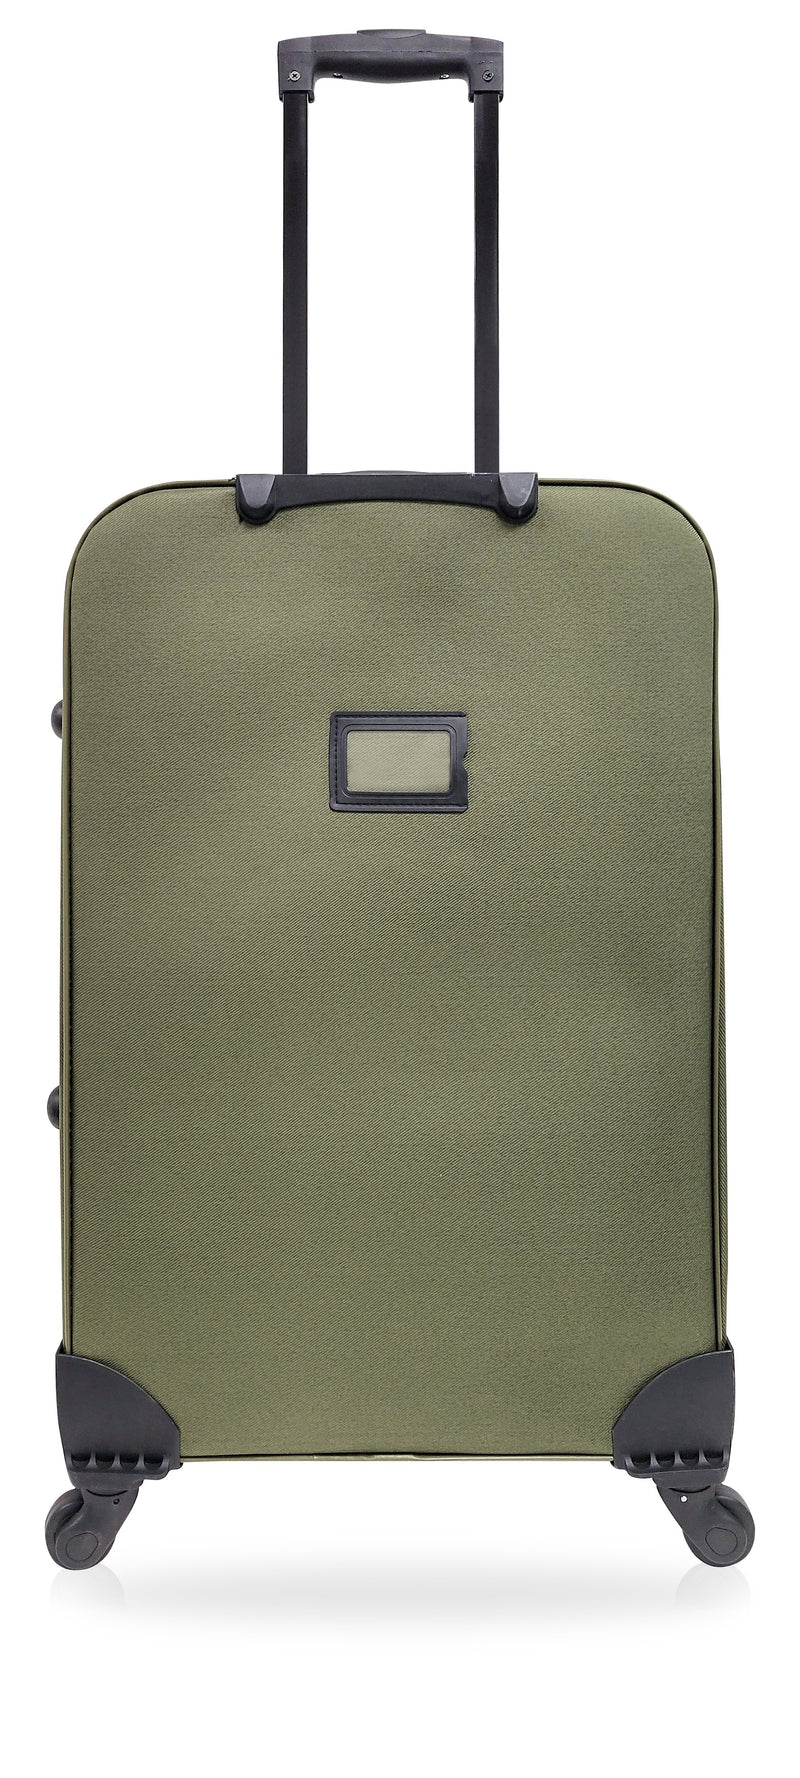 TOSCANO by Tucci Allacciare 4-pc (20", 24", 28", 32") Expandable Luggage Suitcase Set